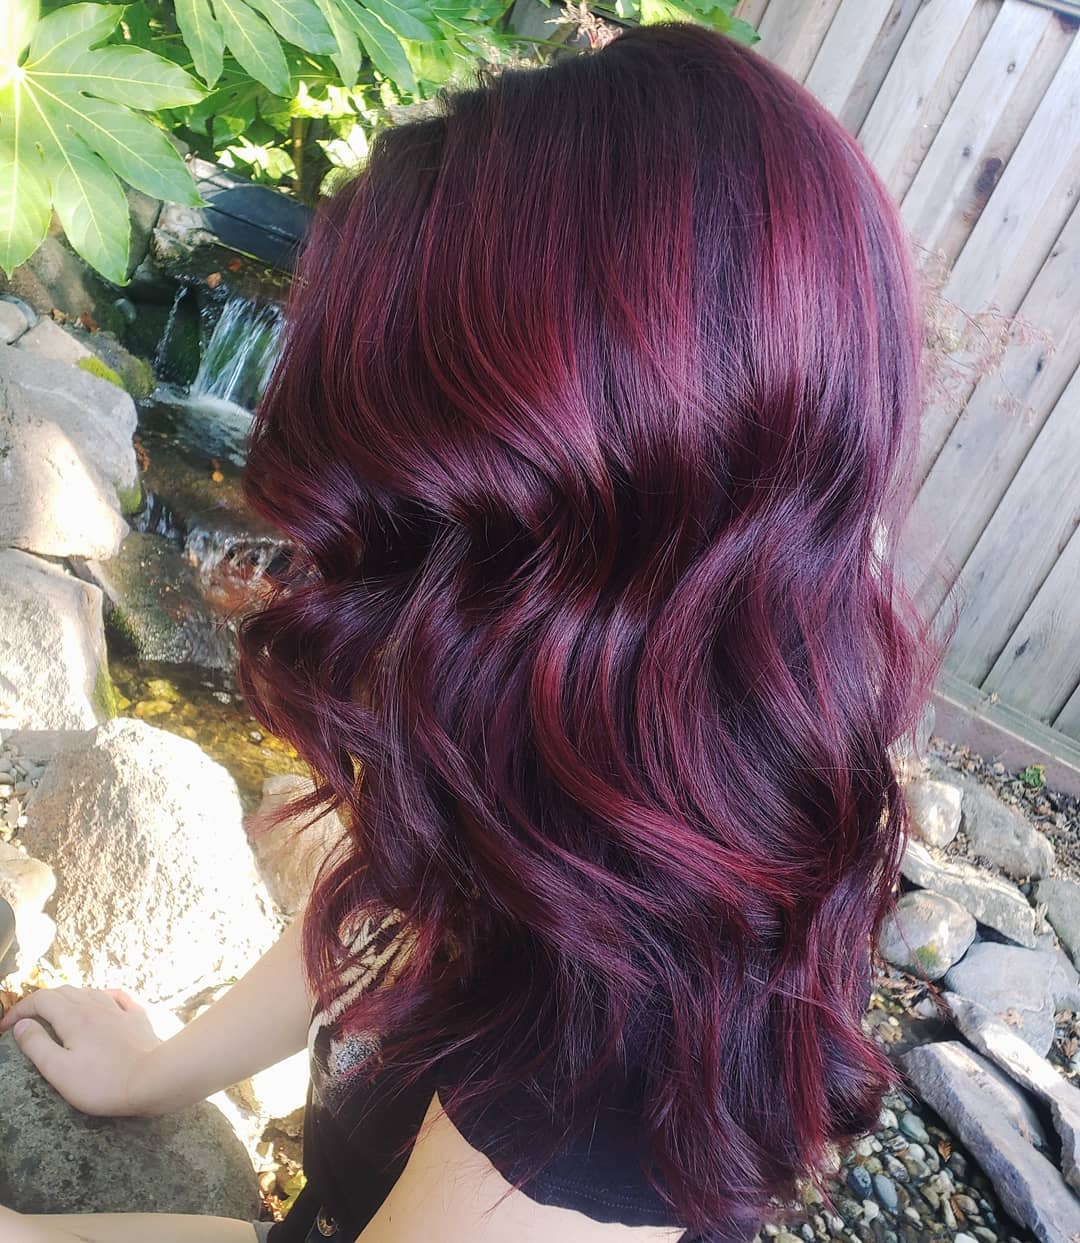 Woman with mid-length curly burgundy mahogany hair